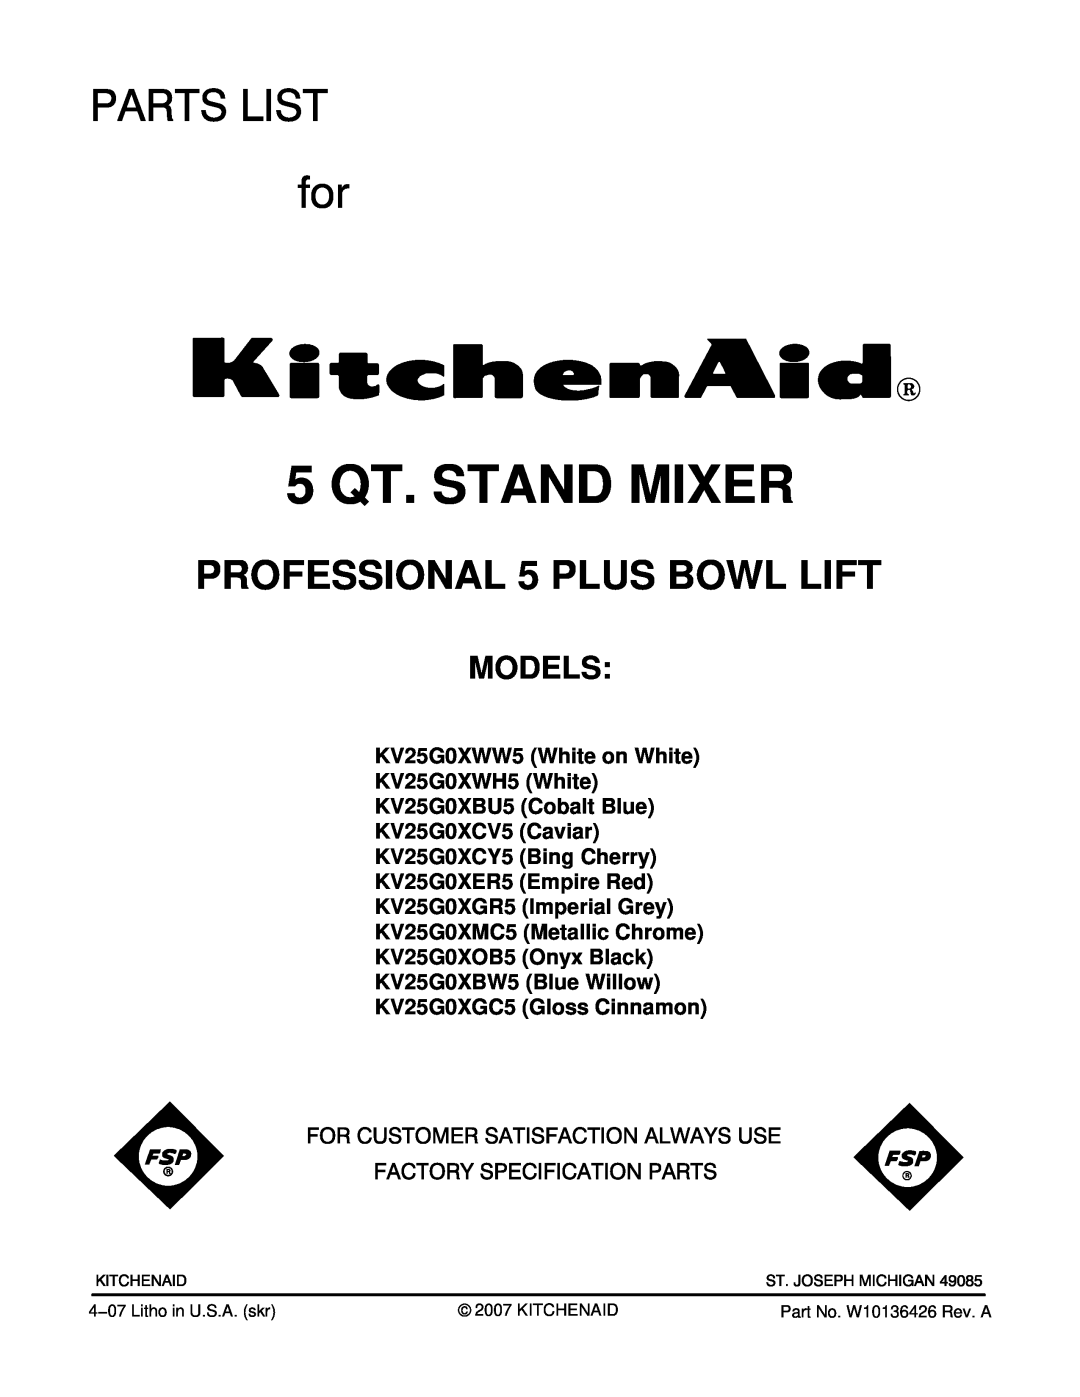 KitchenAid KV25G0XOB5 manual Models, KV25G0XWW5 White on White KV25G0XWH5 White KV25G0XBU5 Cobalt Blue, 5 QT. STAND MIXER 